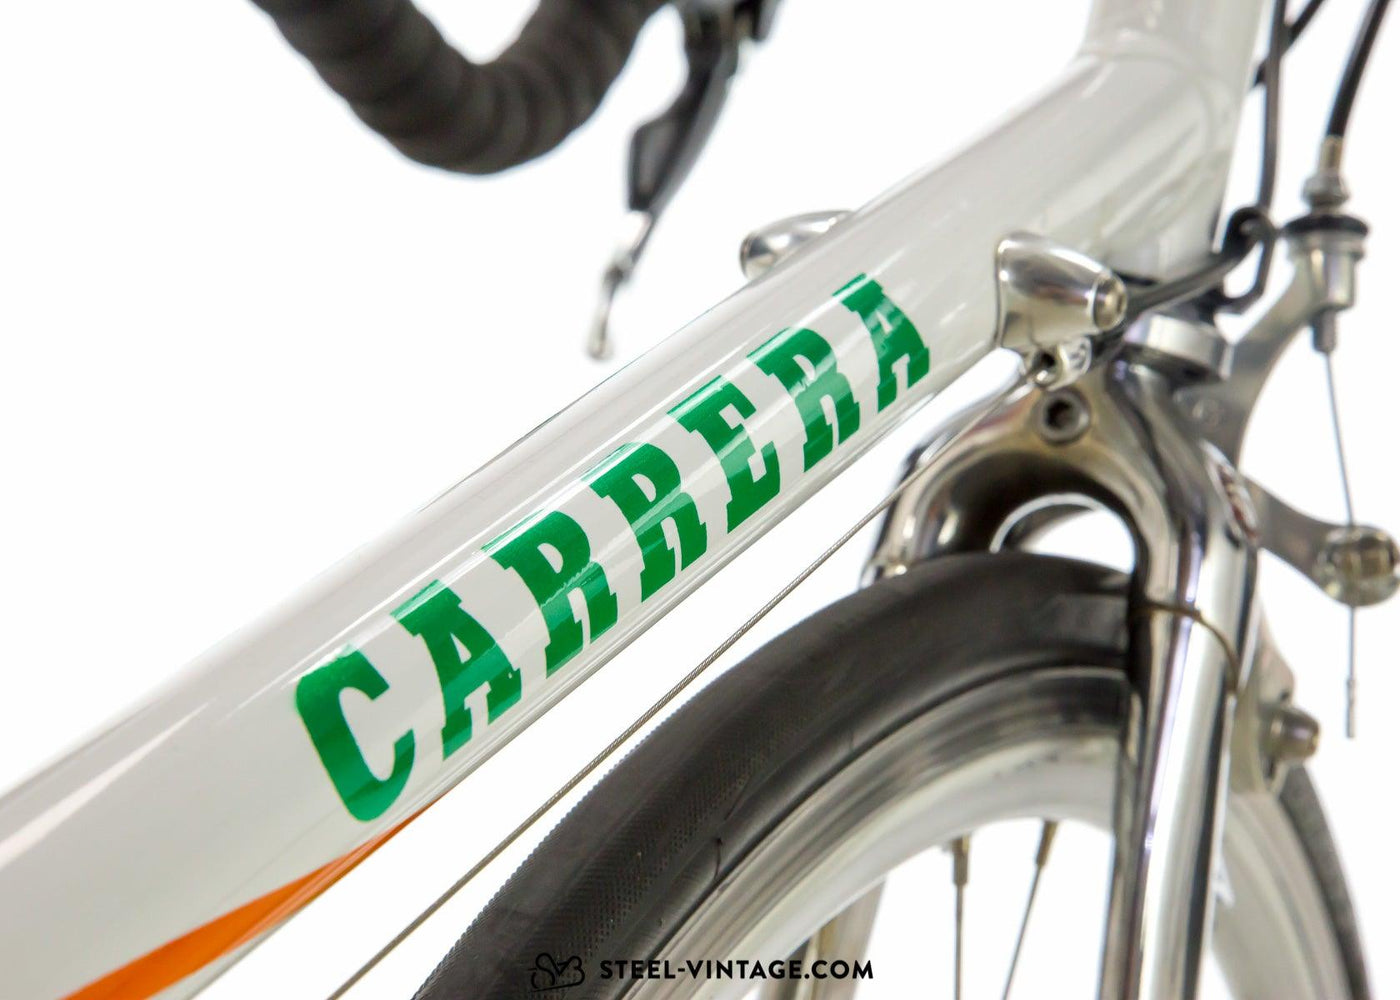 Carrera Neuron Classic Road Bike 1990s - Steel Vintage Bikes